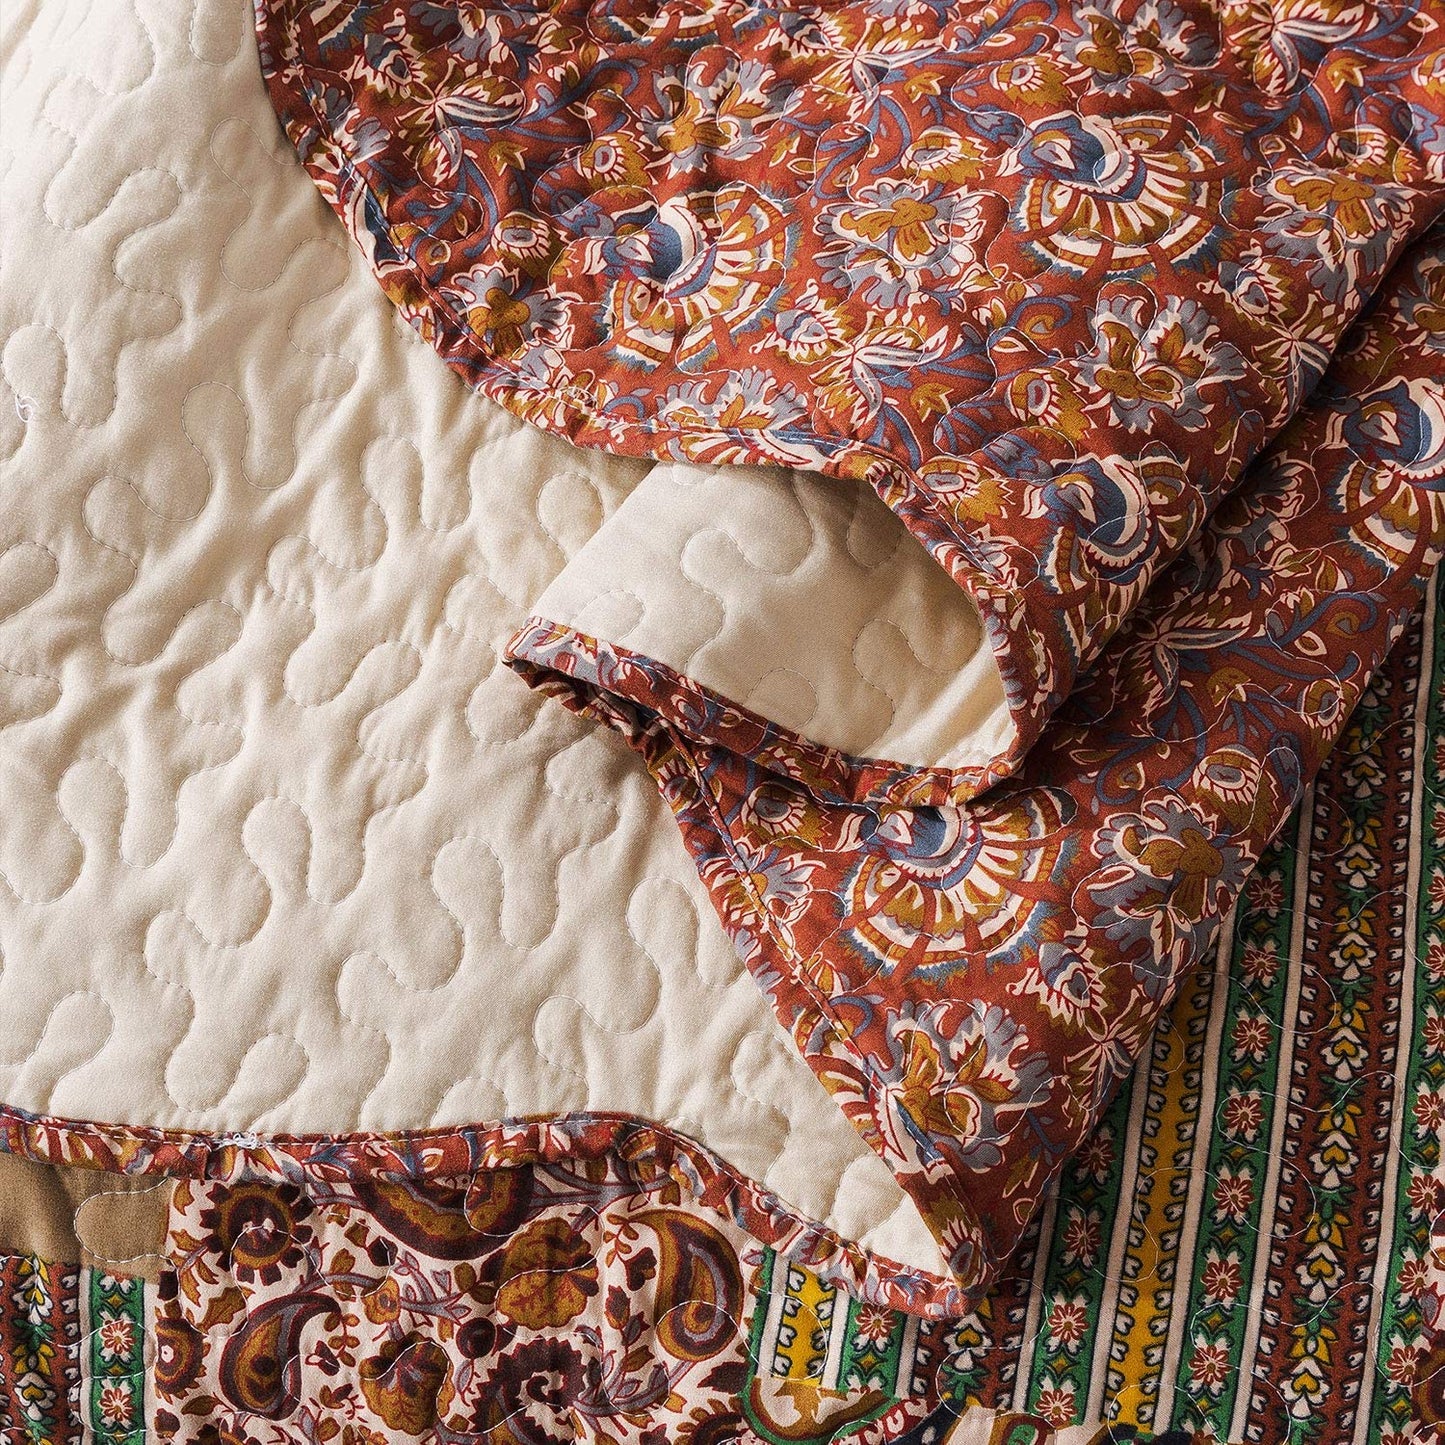 Microfiber Quilt Bedspread Sets-Paisley Garden Pattern Reversible Coverlet Set,Queen Size